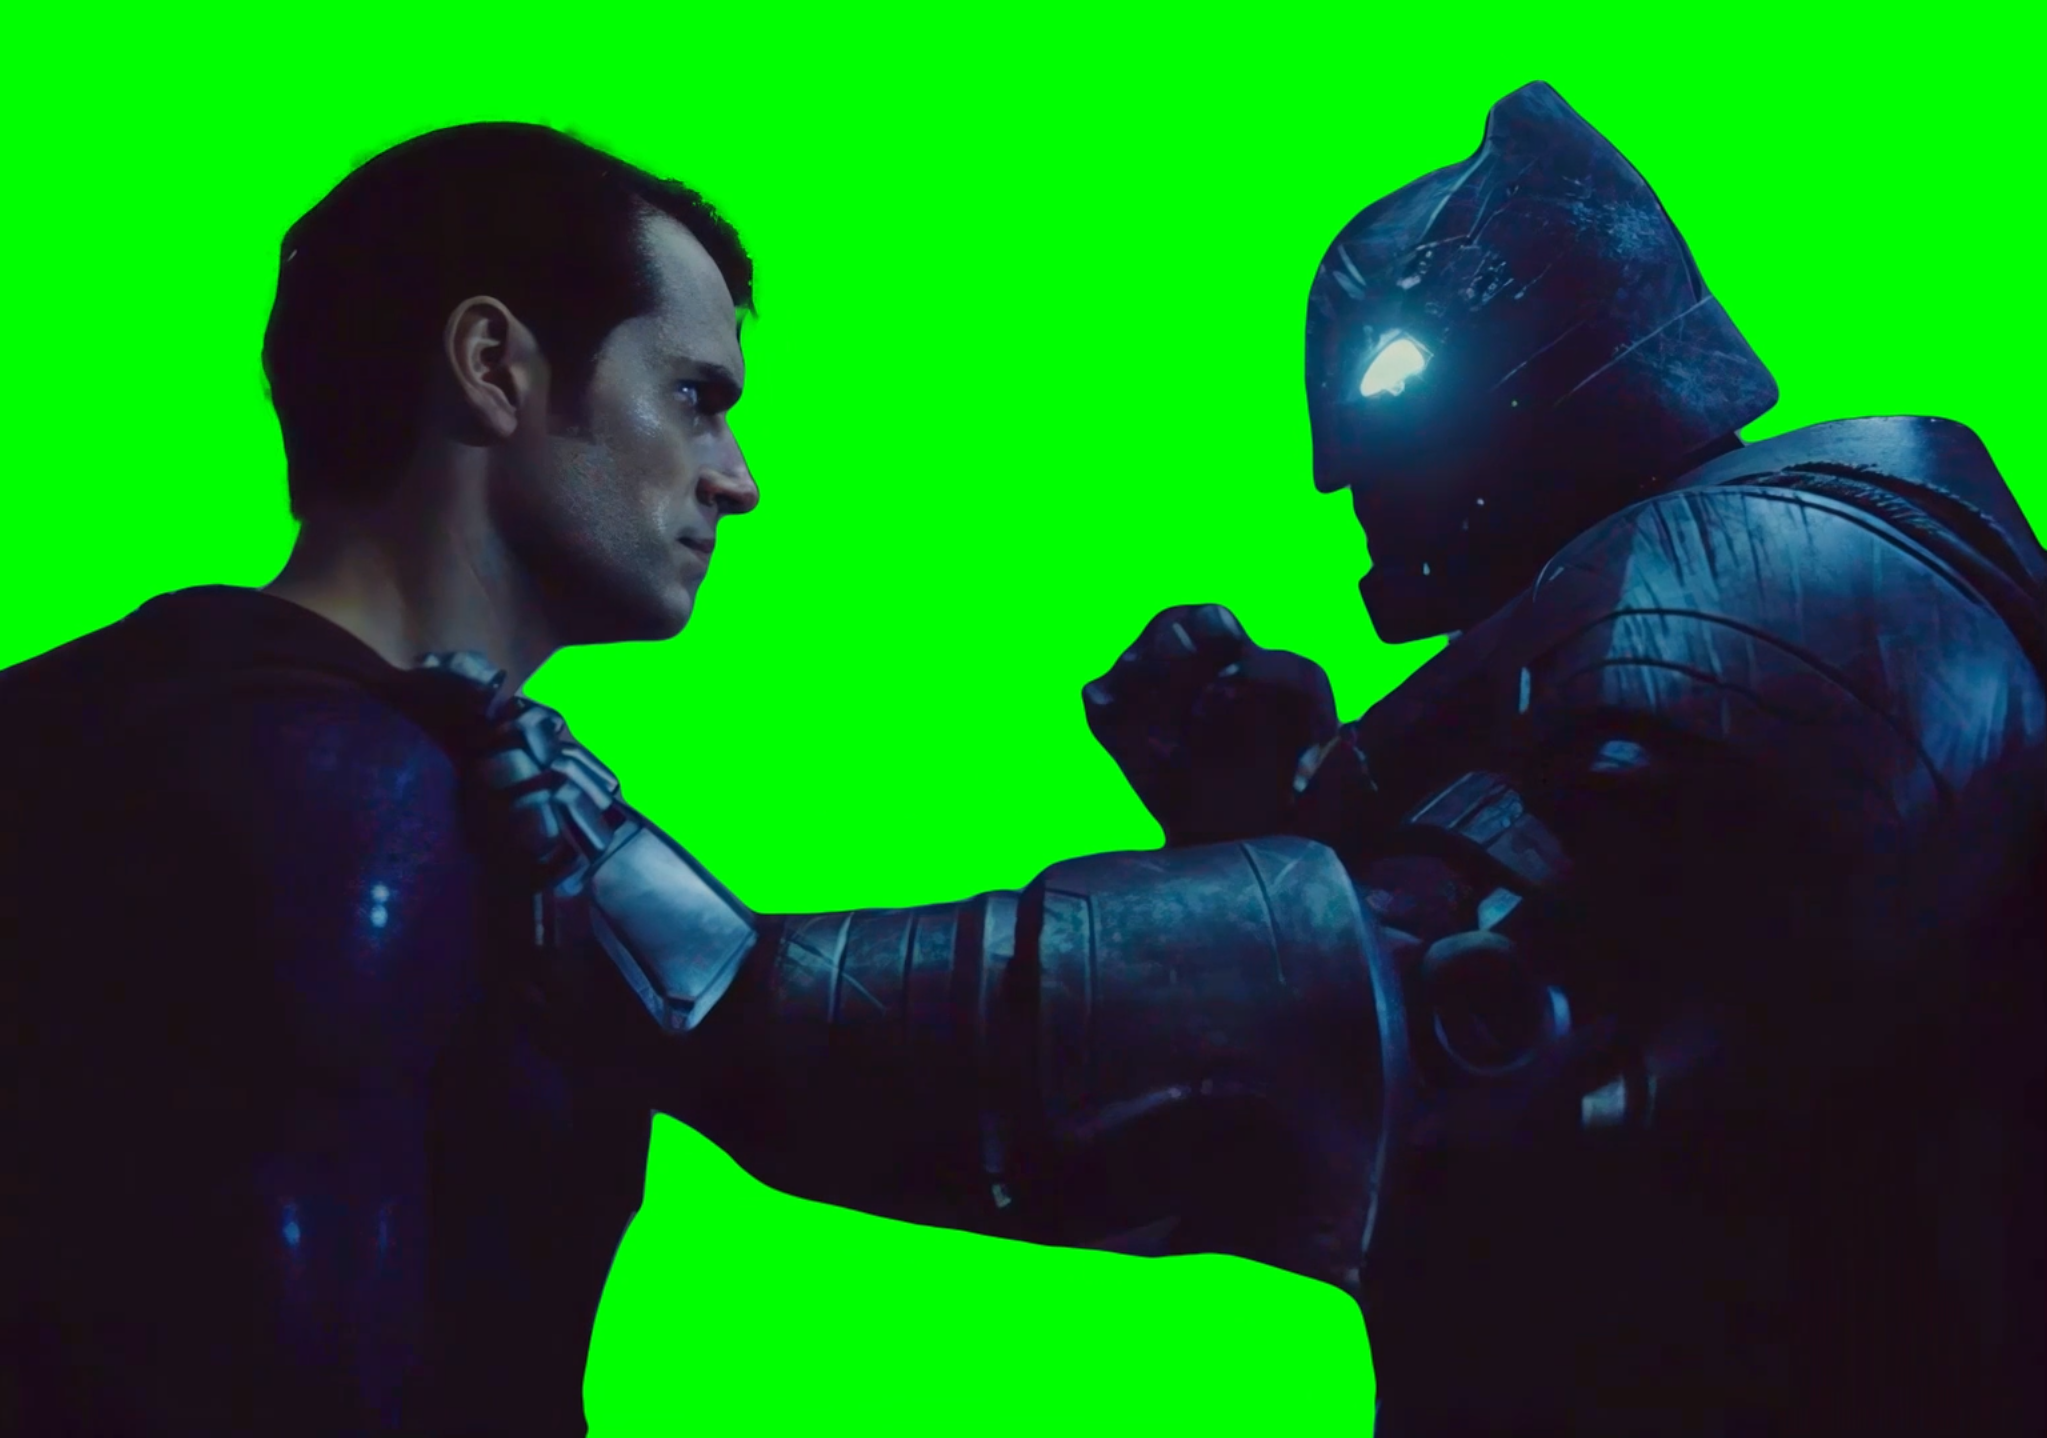 Batman punching Superman - Batman v Superman: Dawn of Justice (Green Screen)